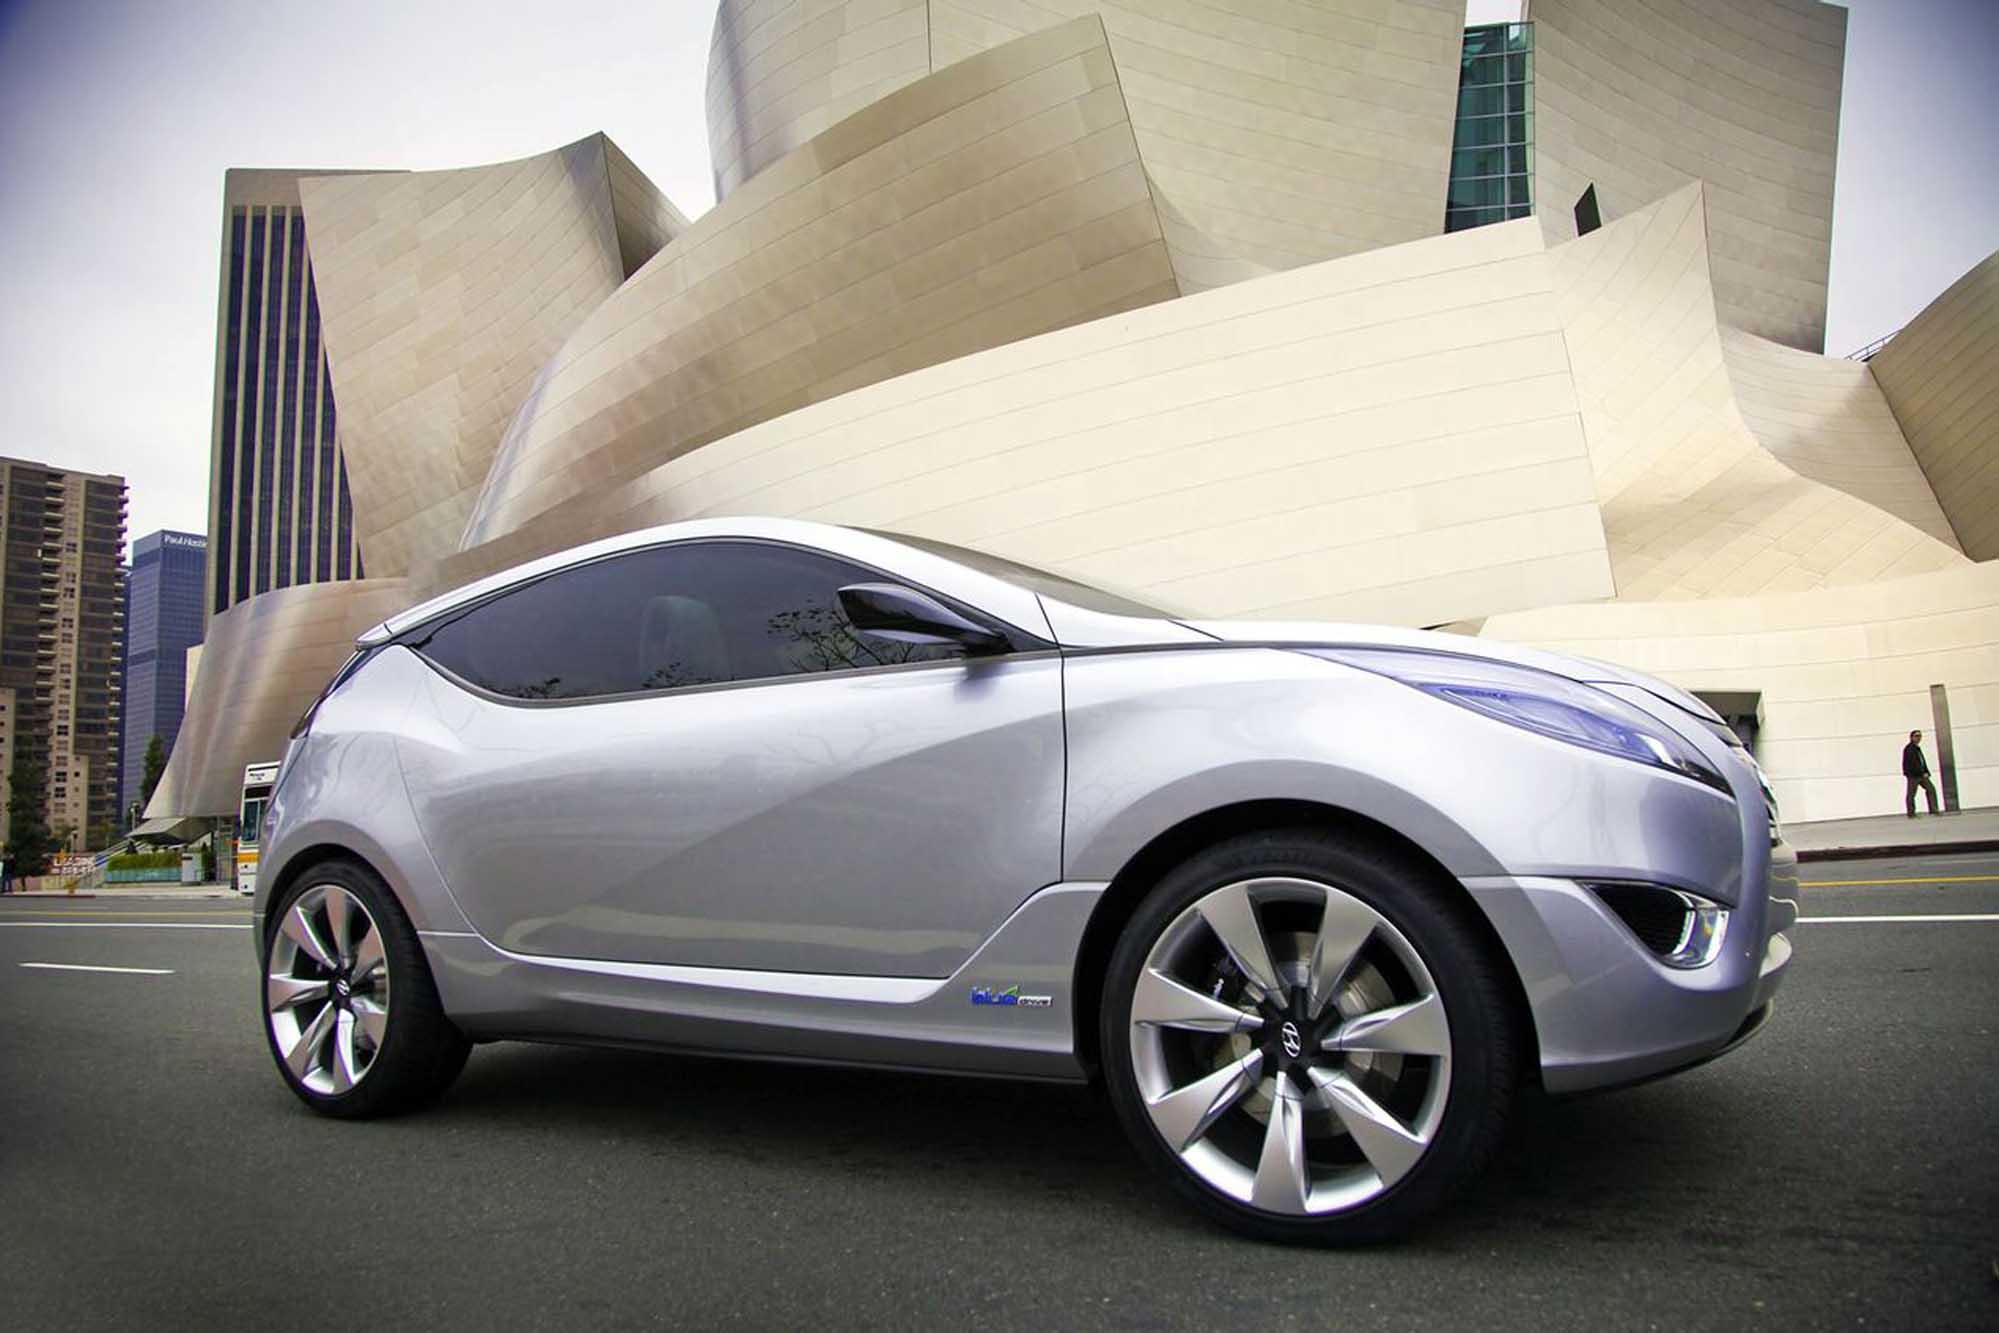 Image principale de l'actu: Hyundai nuvis concept blue drive 